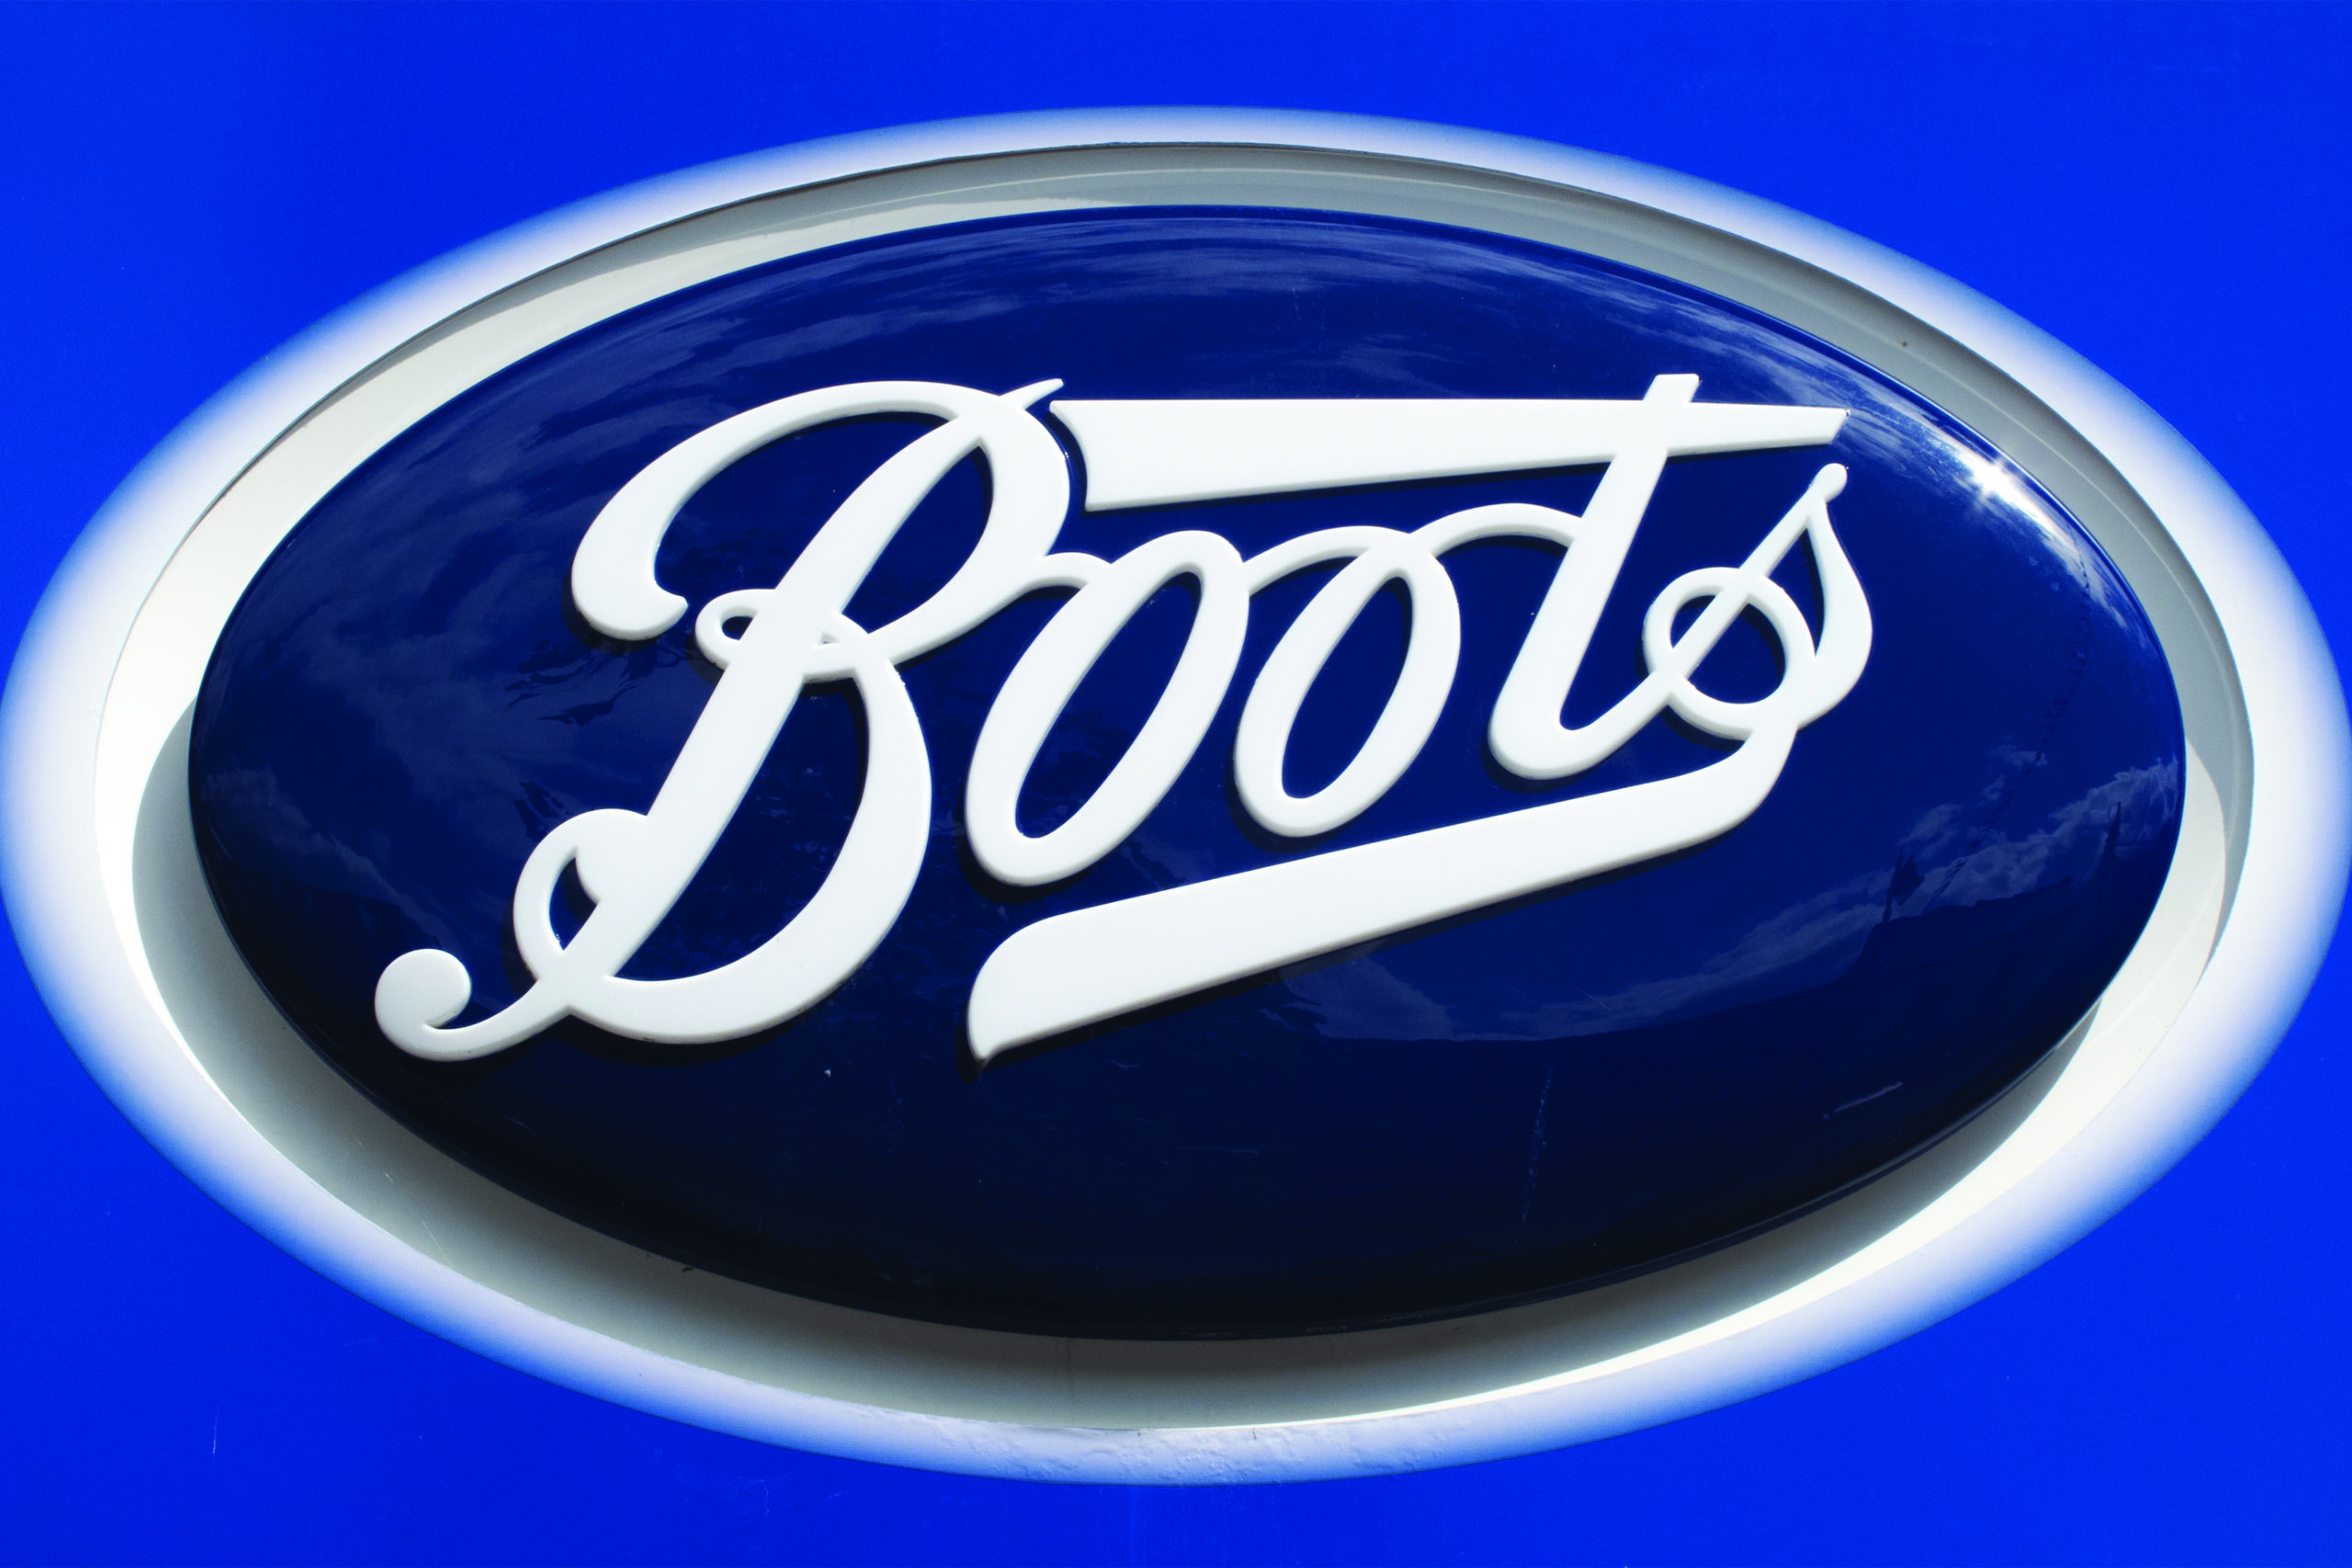 Boot wait. Boots uk logo. Boots uk London 'logo.